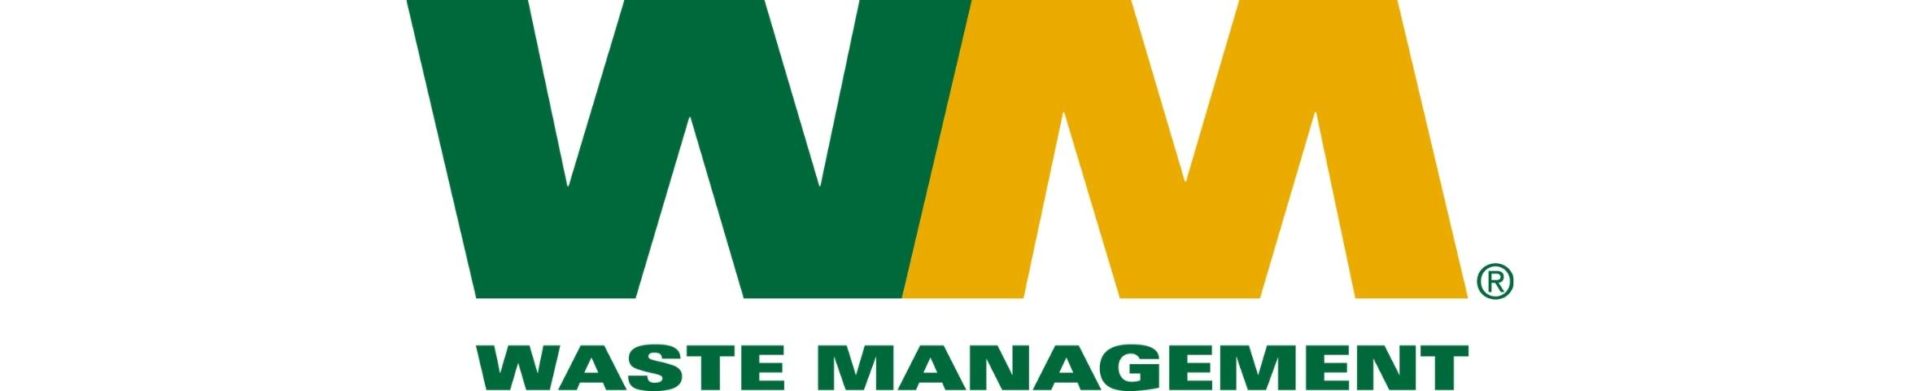 the Waste Management logo